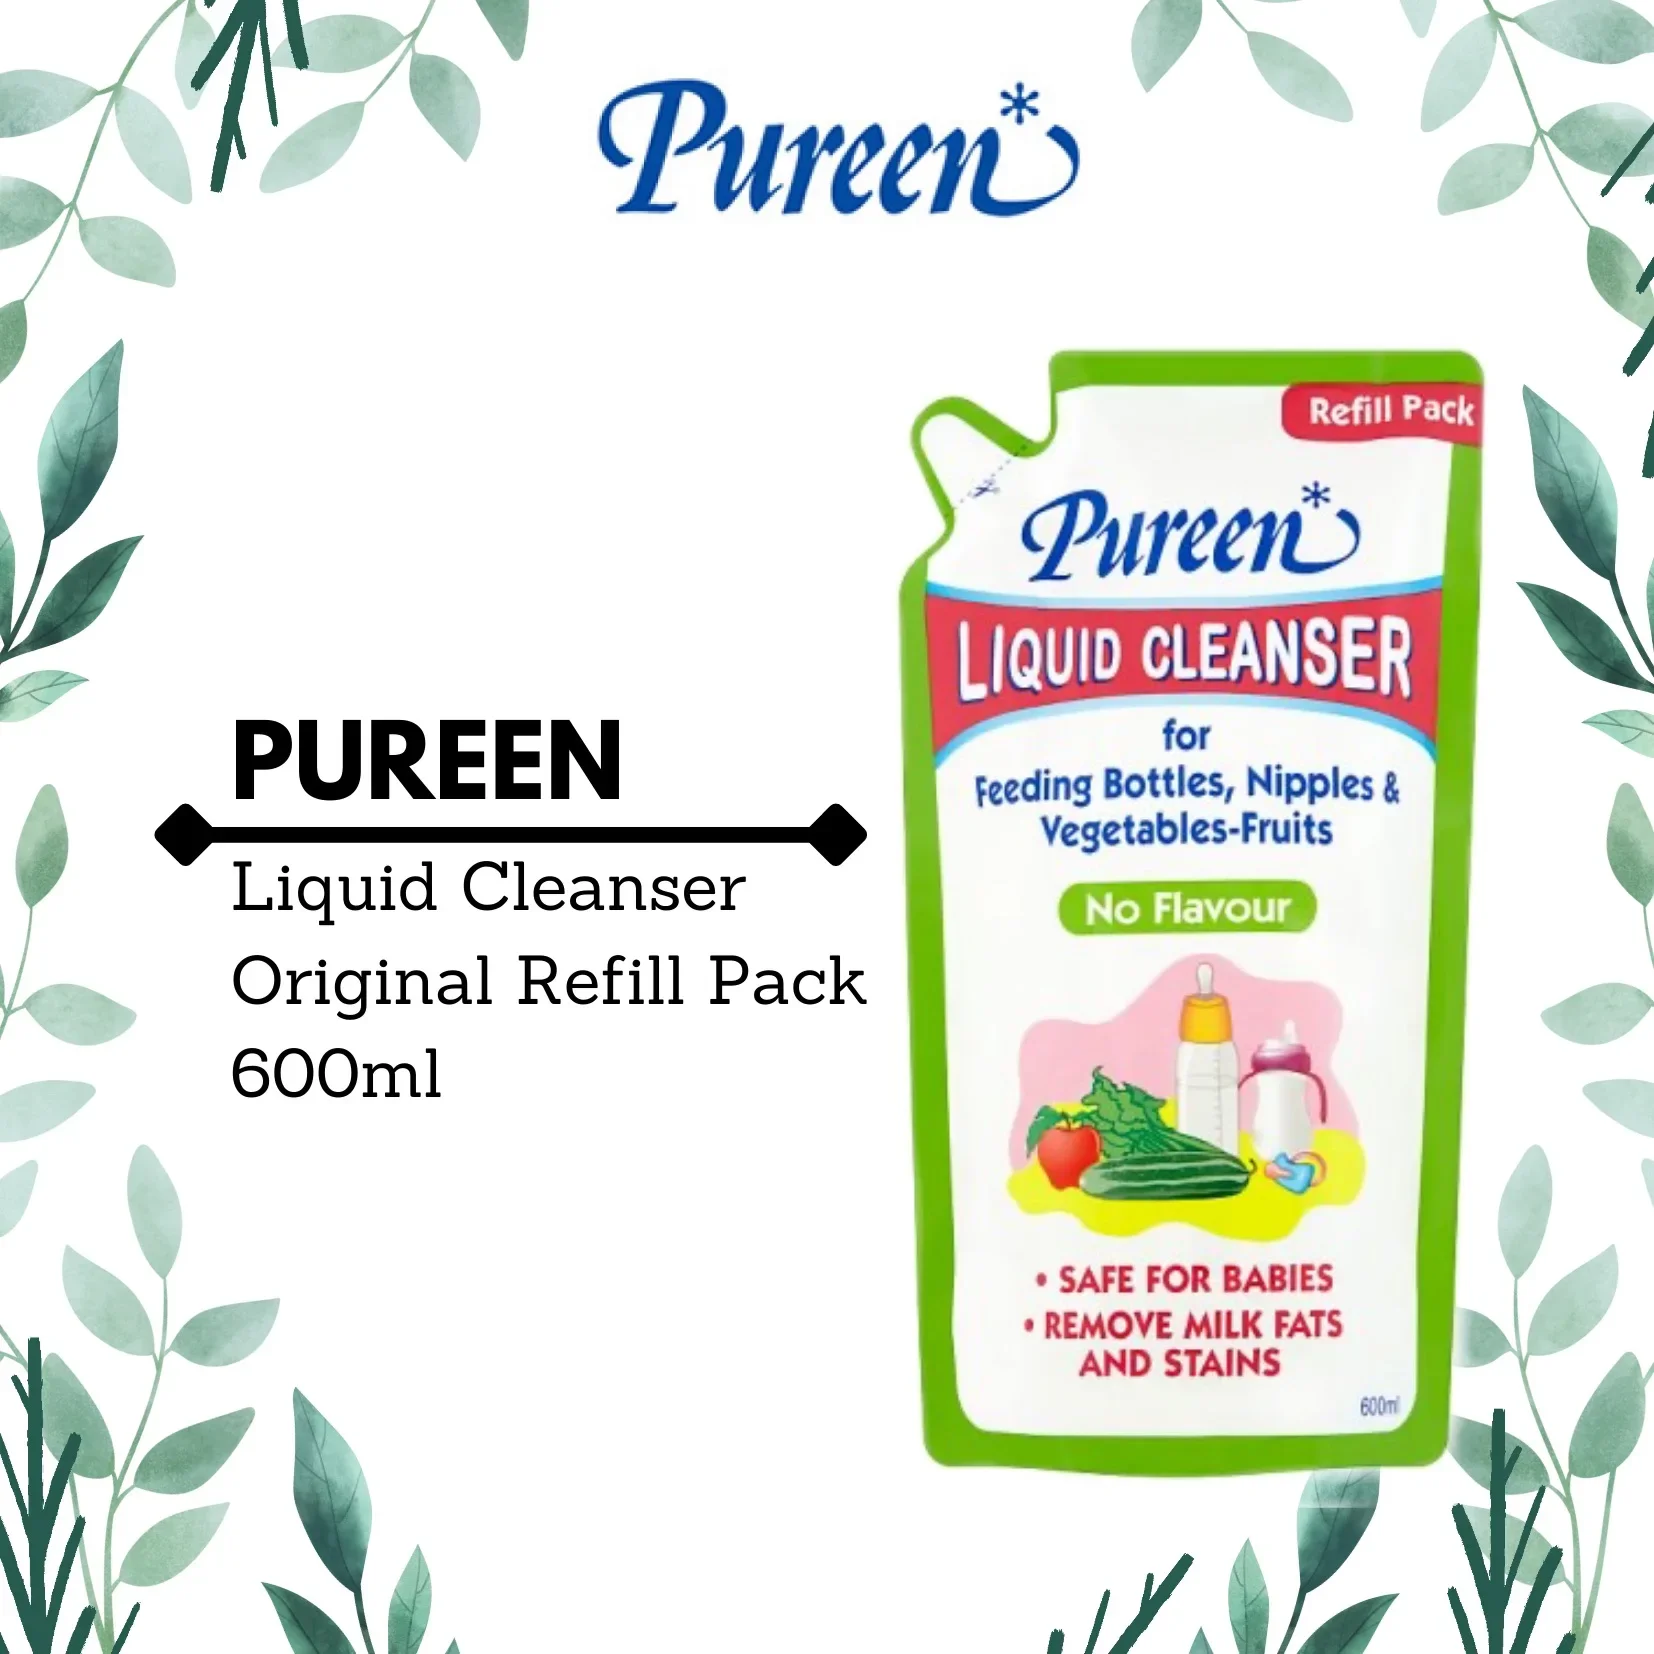 Pureen Liquid Cleanser Original Refill Pack 600ml